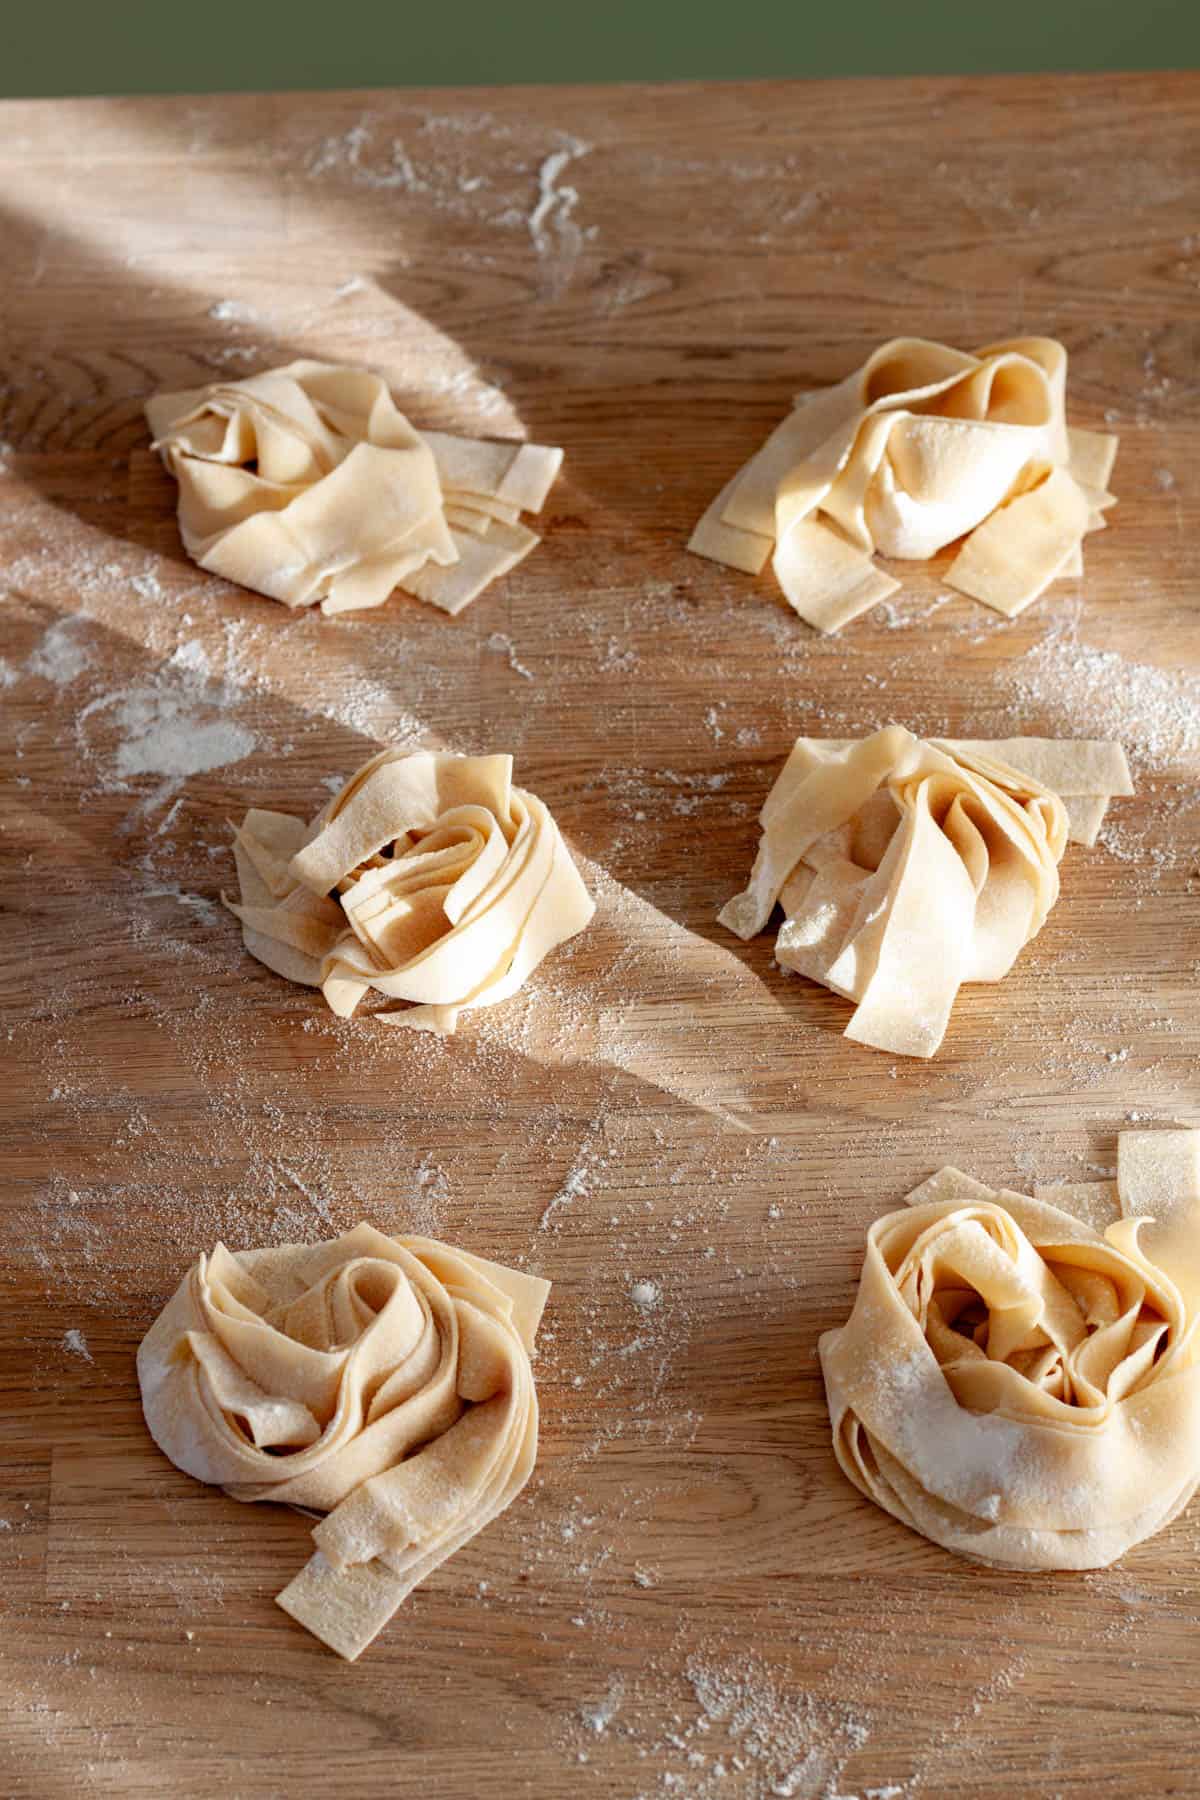 Mounds of homemade pasta on a butcherblock countertop.